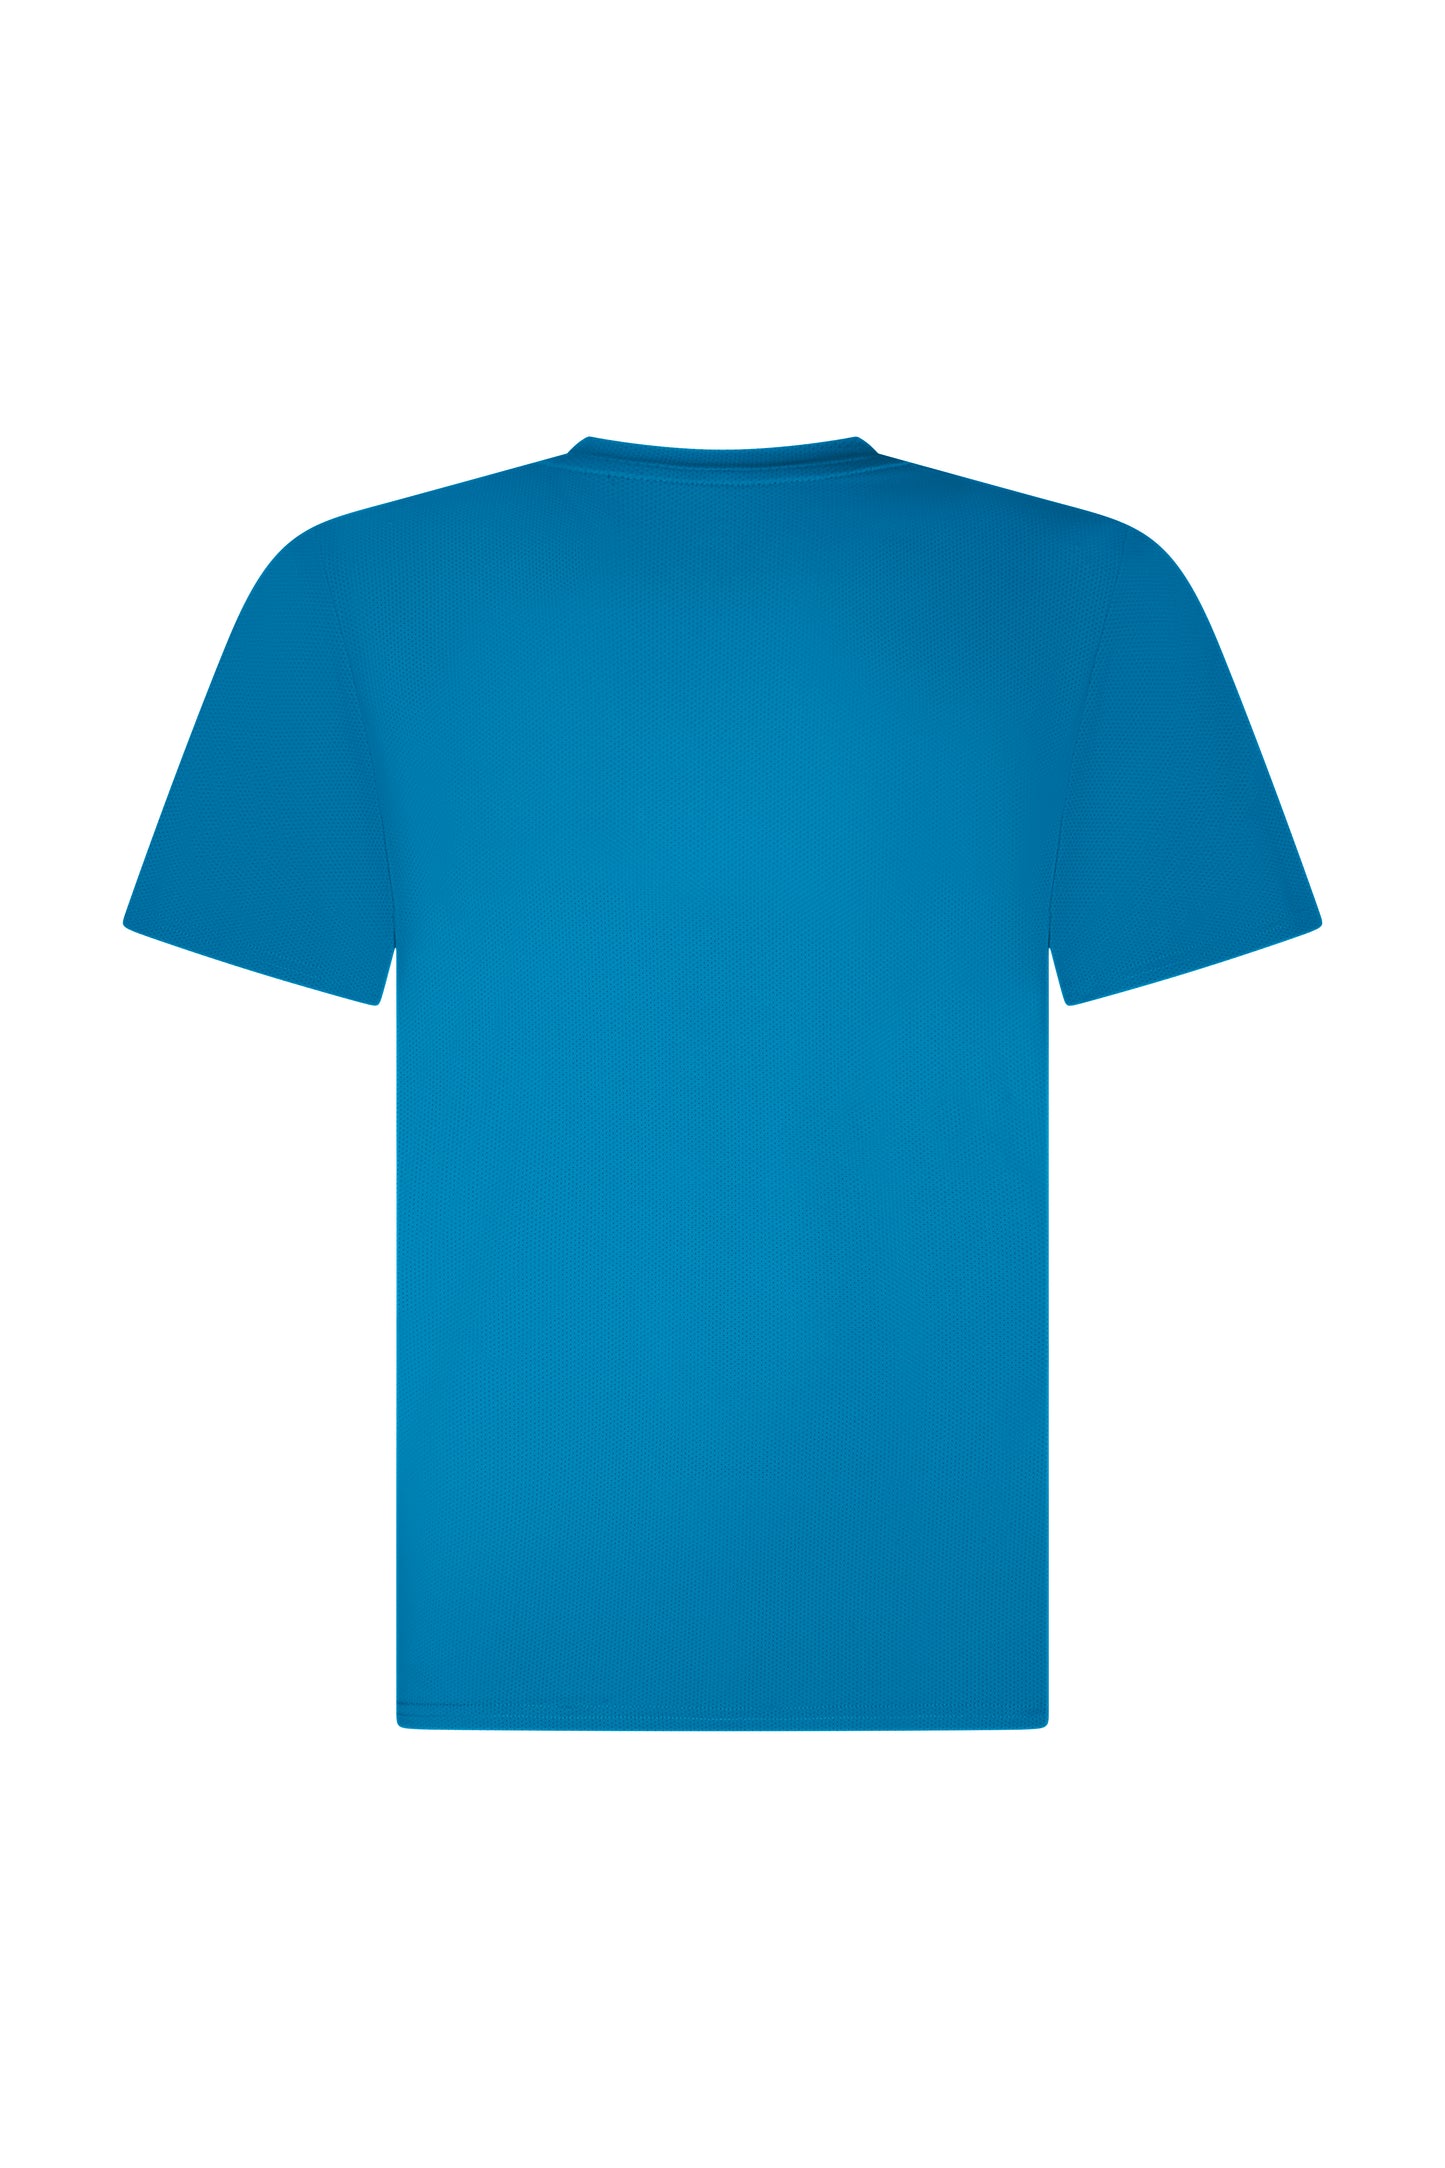 Junior Graphic Logo T-Shirt - Teal Blue